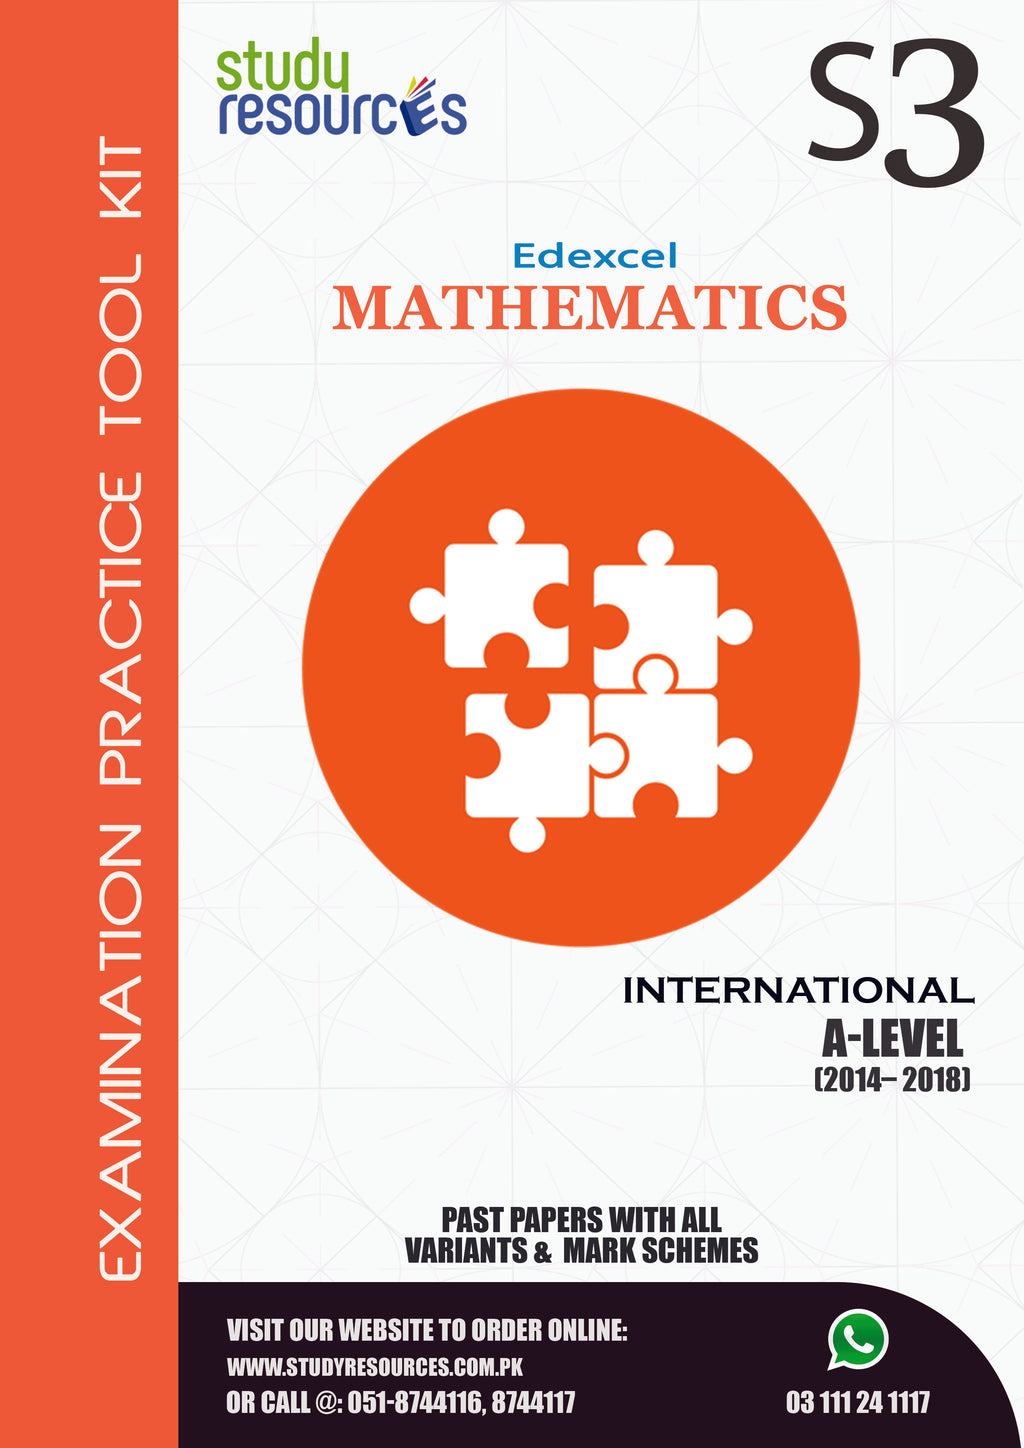 Edexcel A-Level Mathematics S-3 Past Papers (2014-2018)